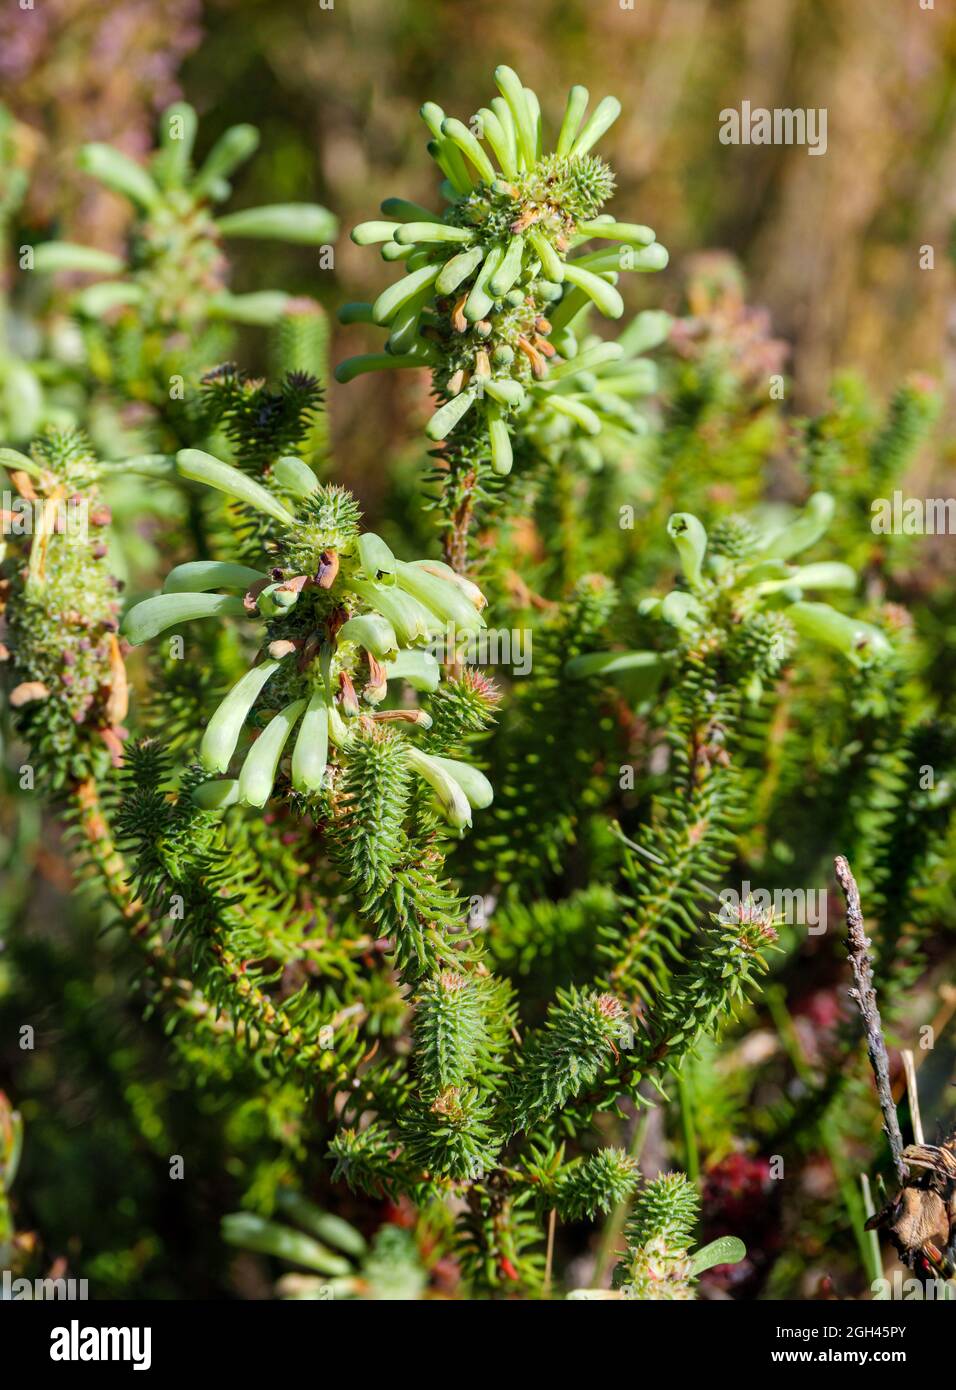 Image Number G9R396574-Edit. Green heath, white bottlebrush heath, groenheide, groenbottelheide (Erica sessiliflora). Western Cape. South Africa Stock Photo